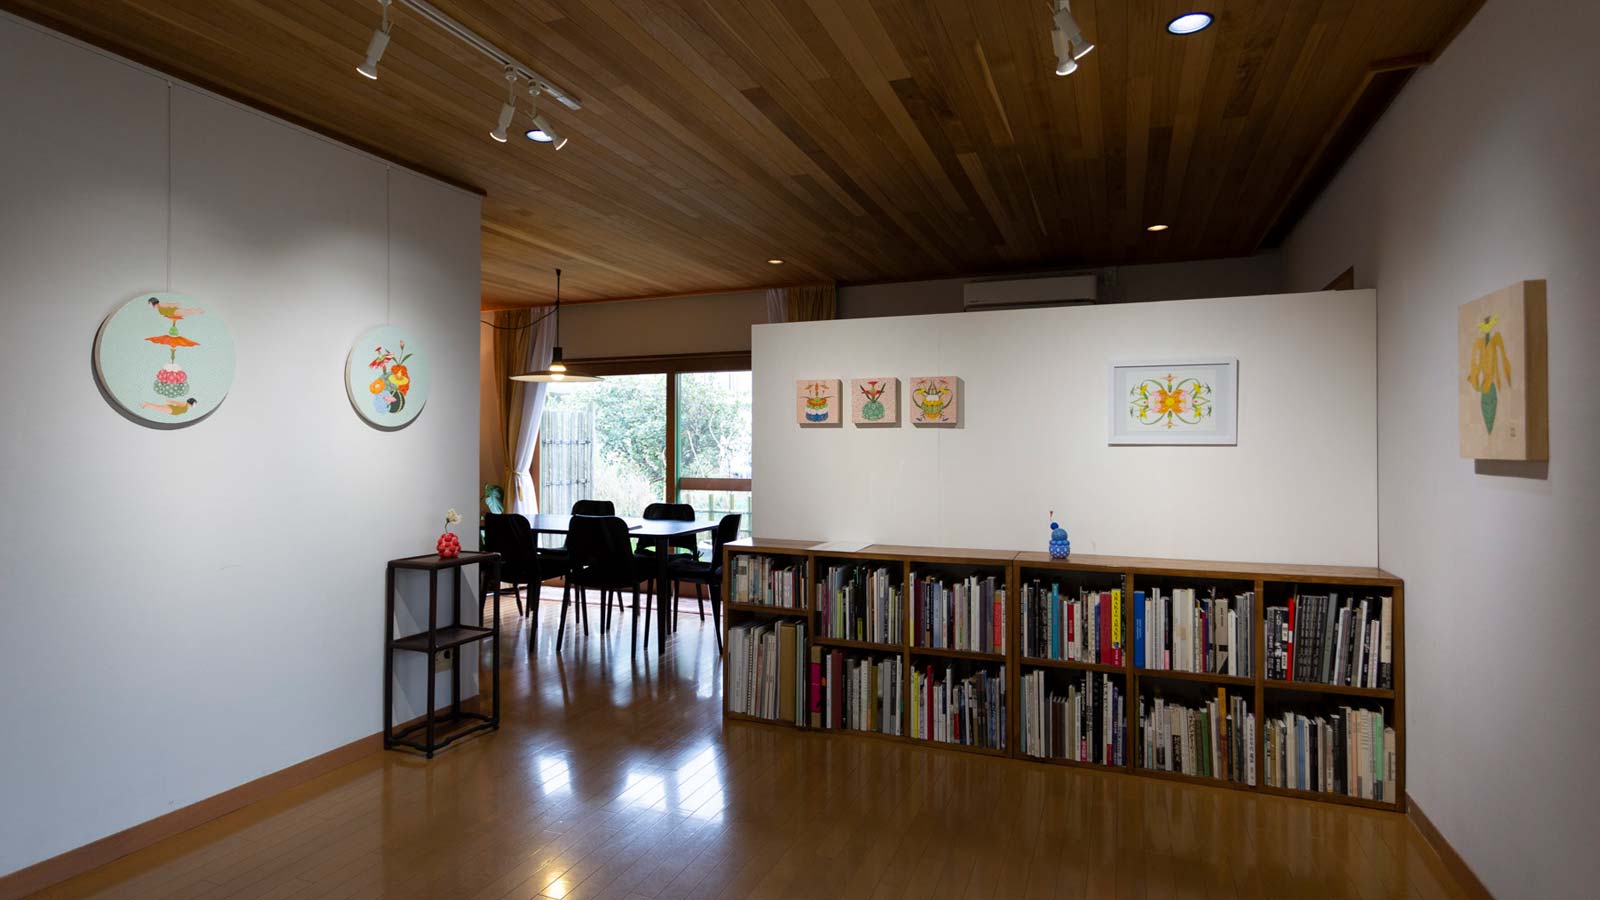 Kunitachi Art Center 2020